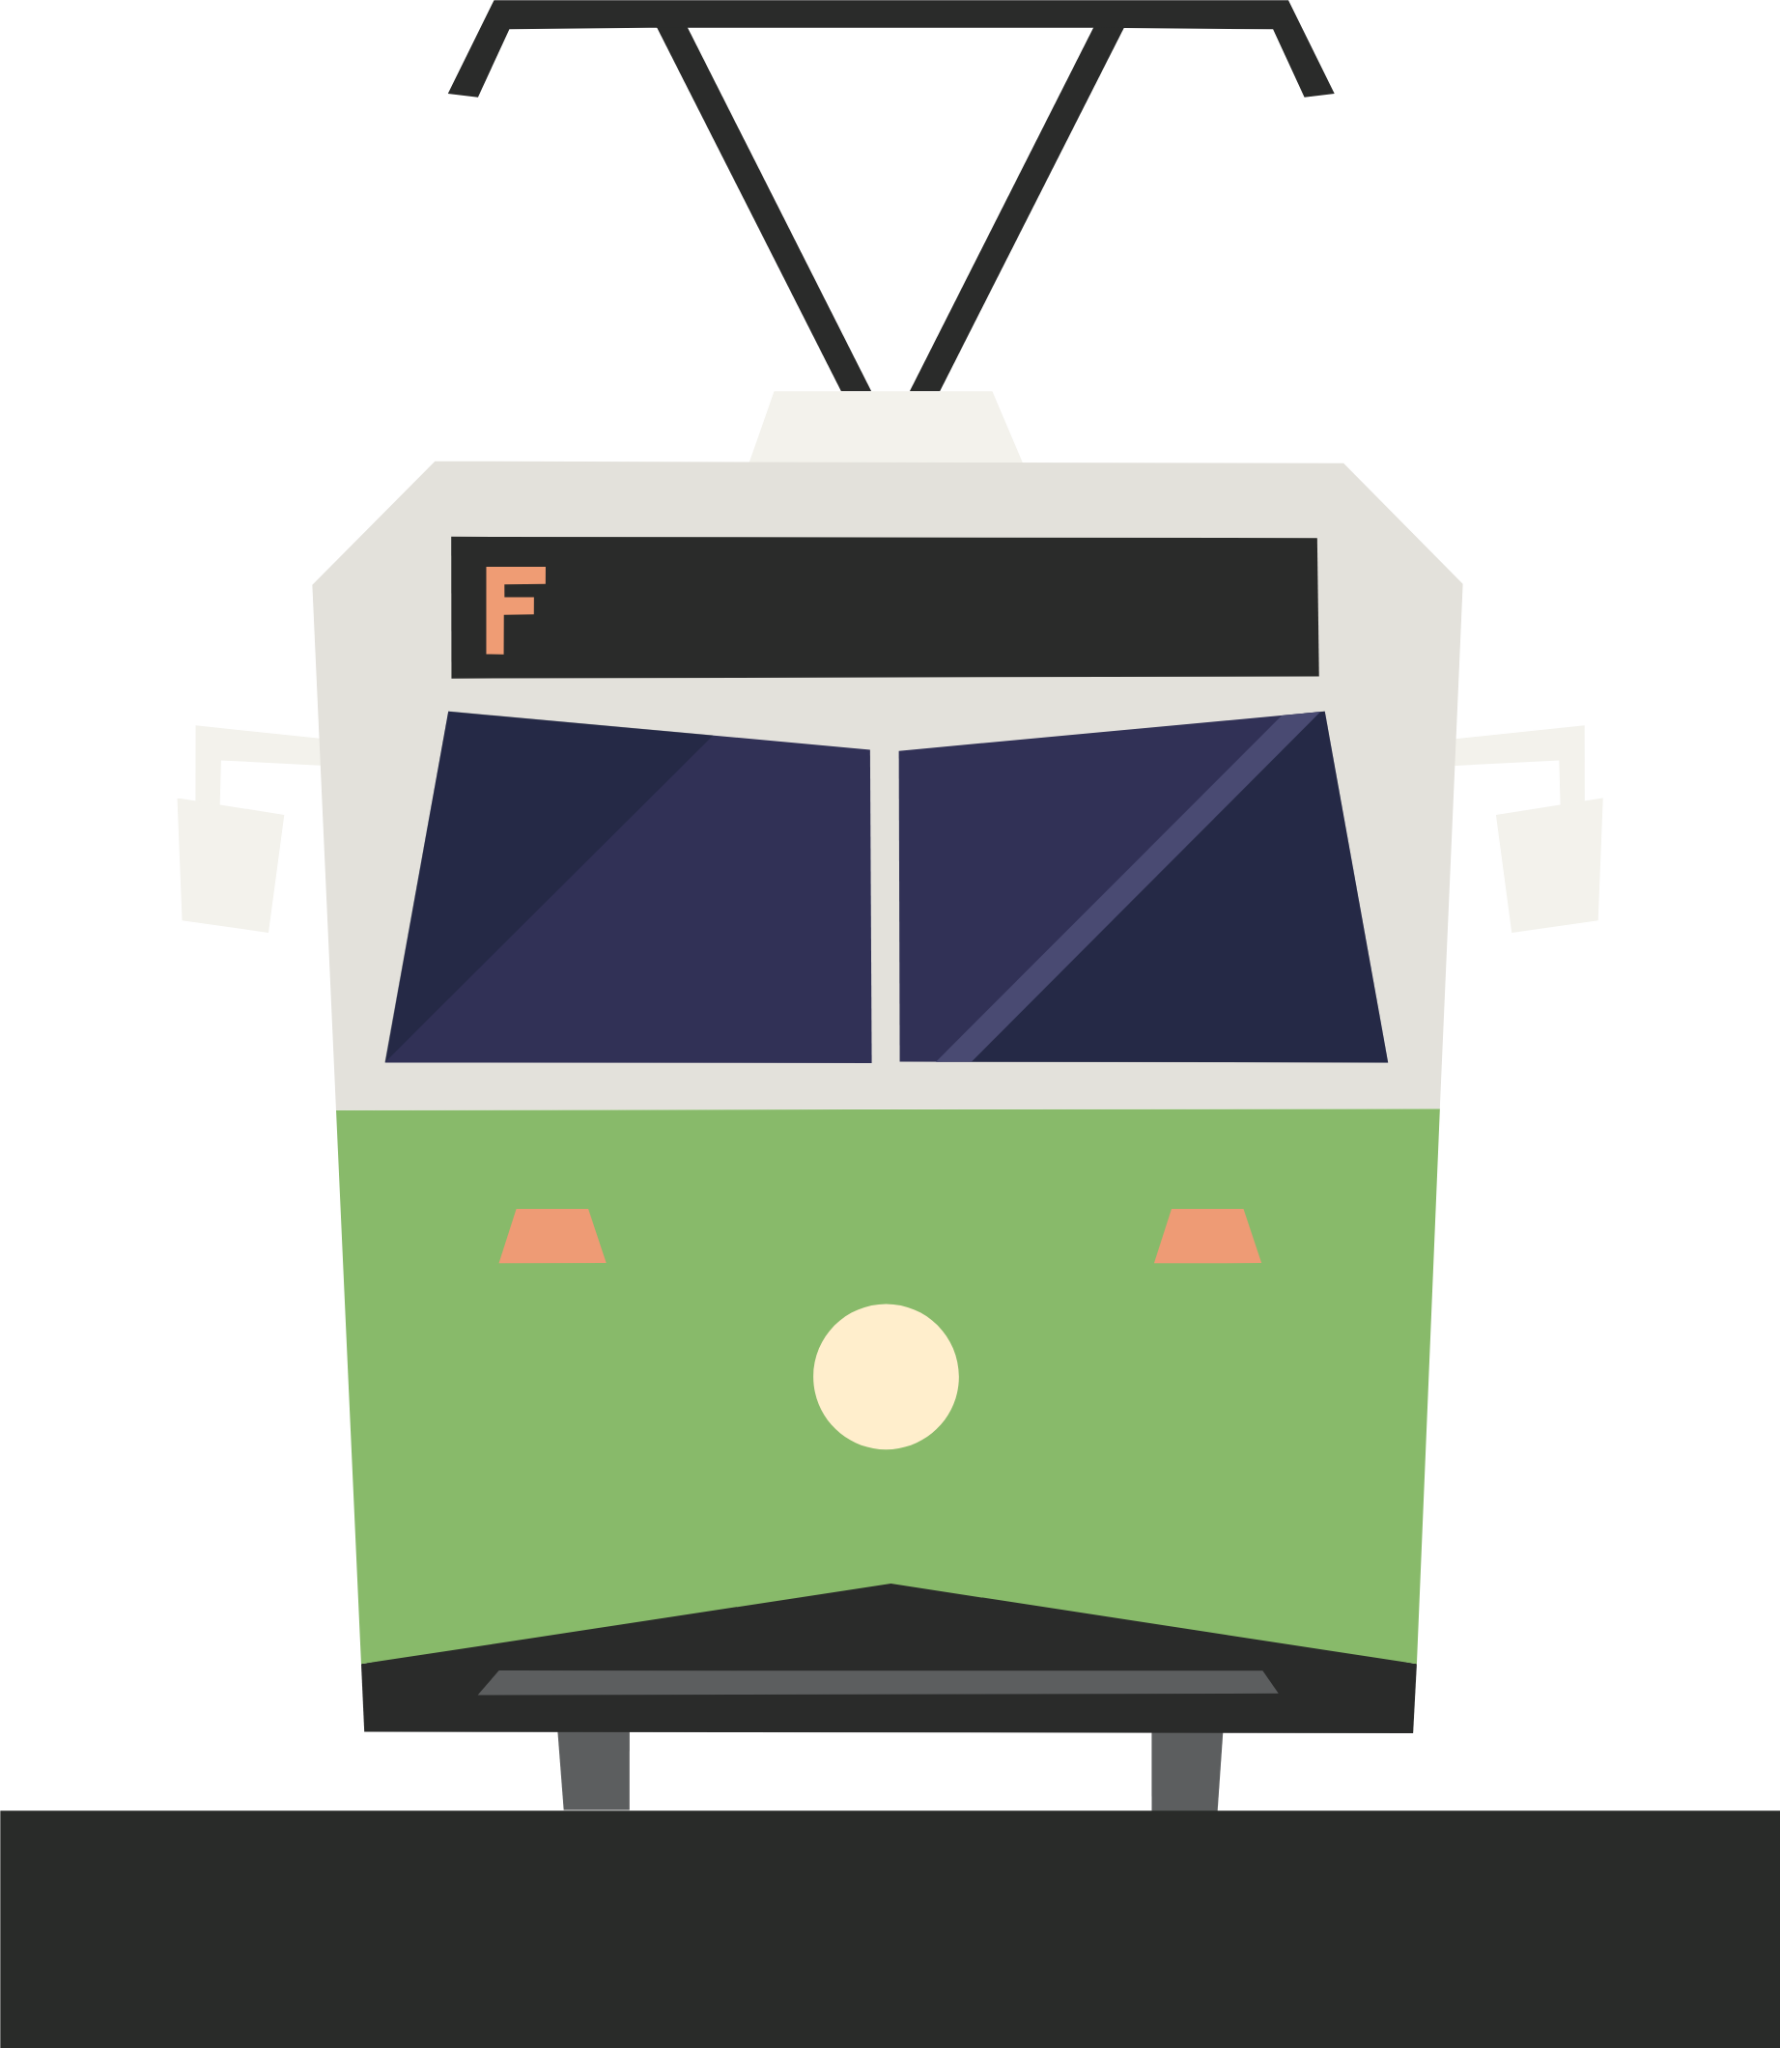 streetcar illustration